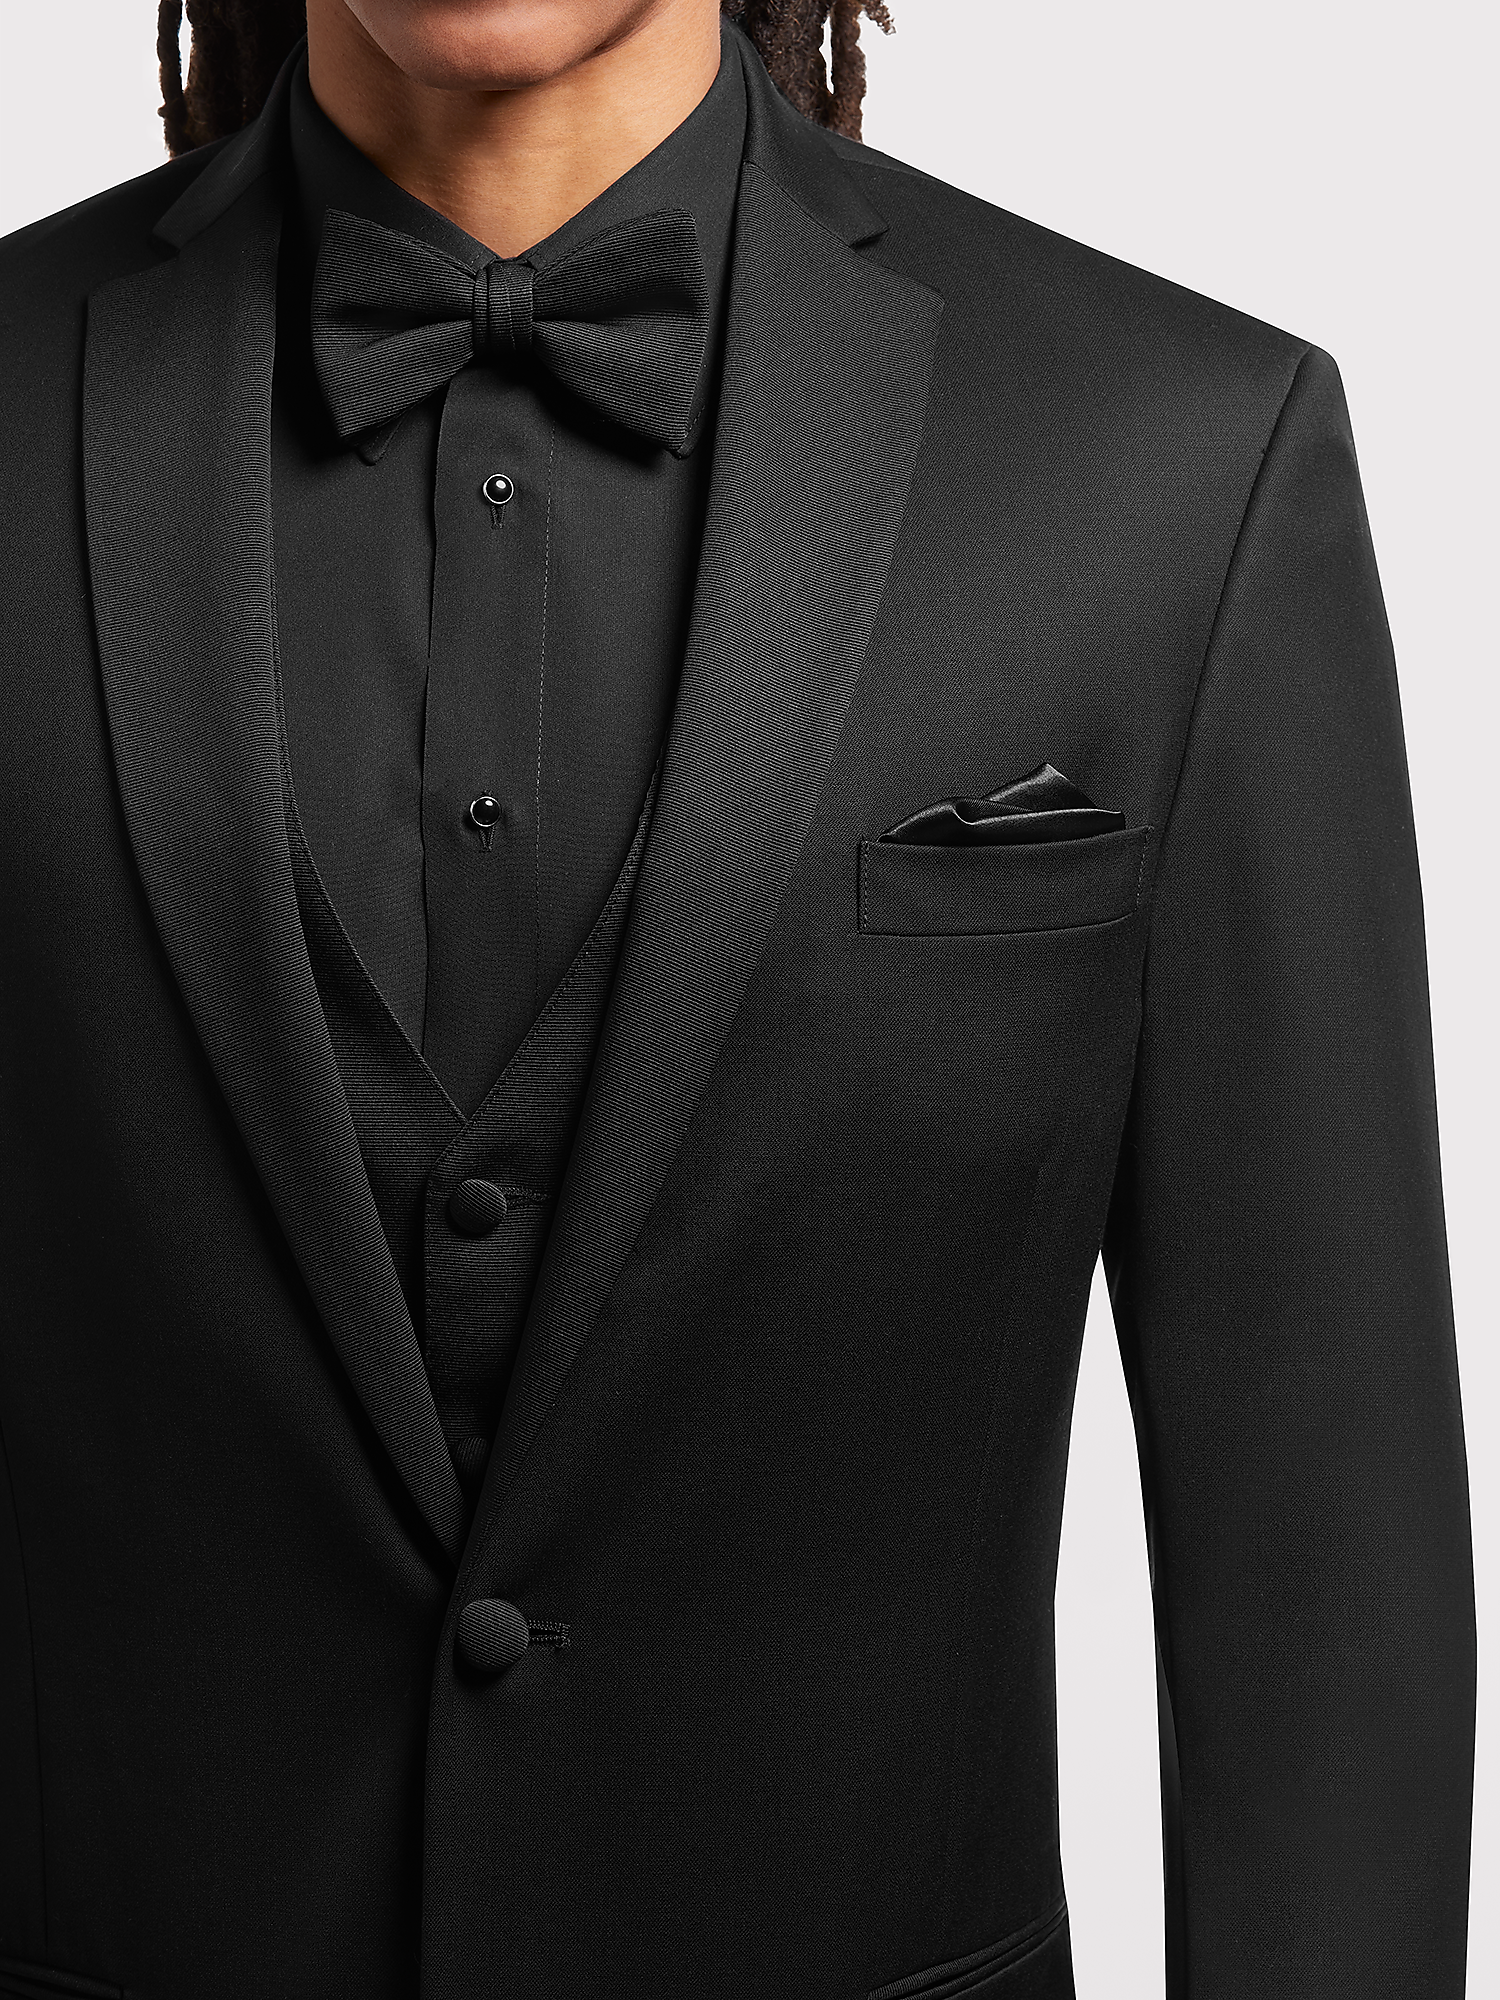 Black Tuxedo | Black By Vera Wang Tuxedo | Tuxedo Rental